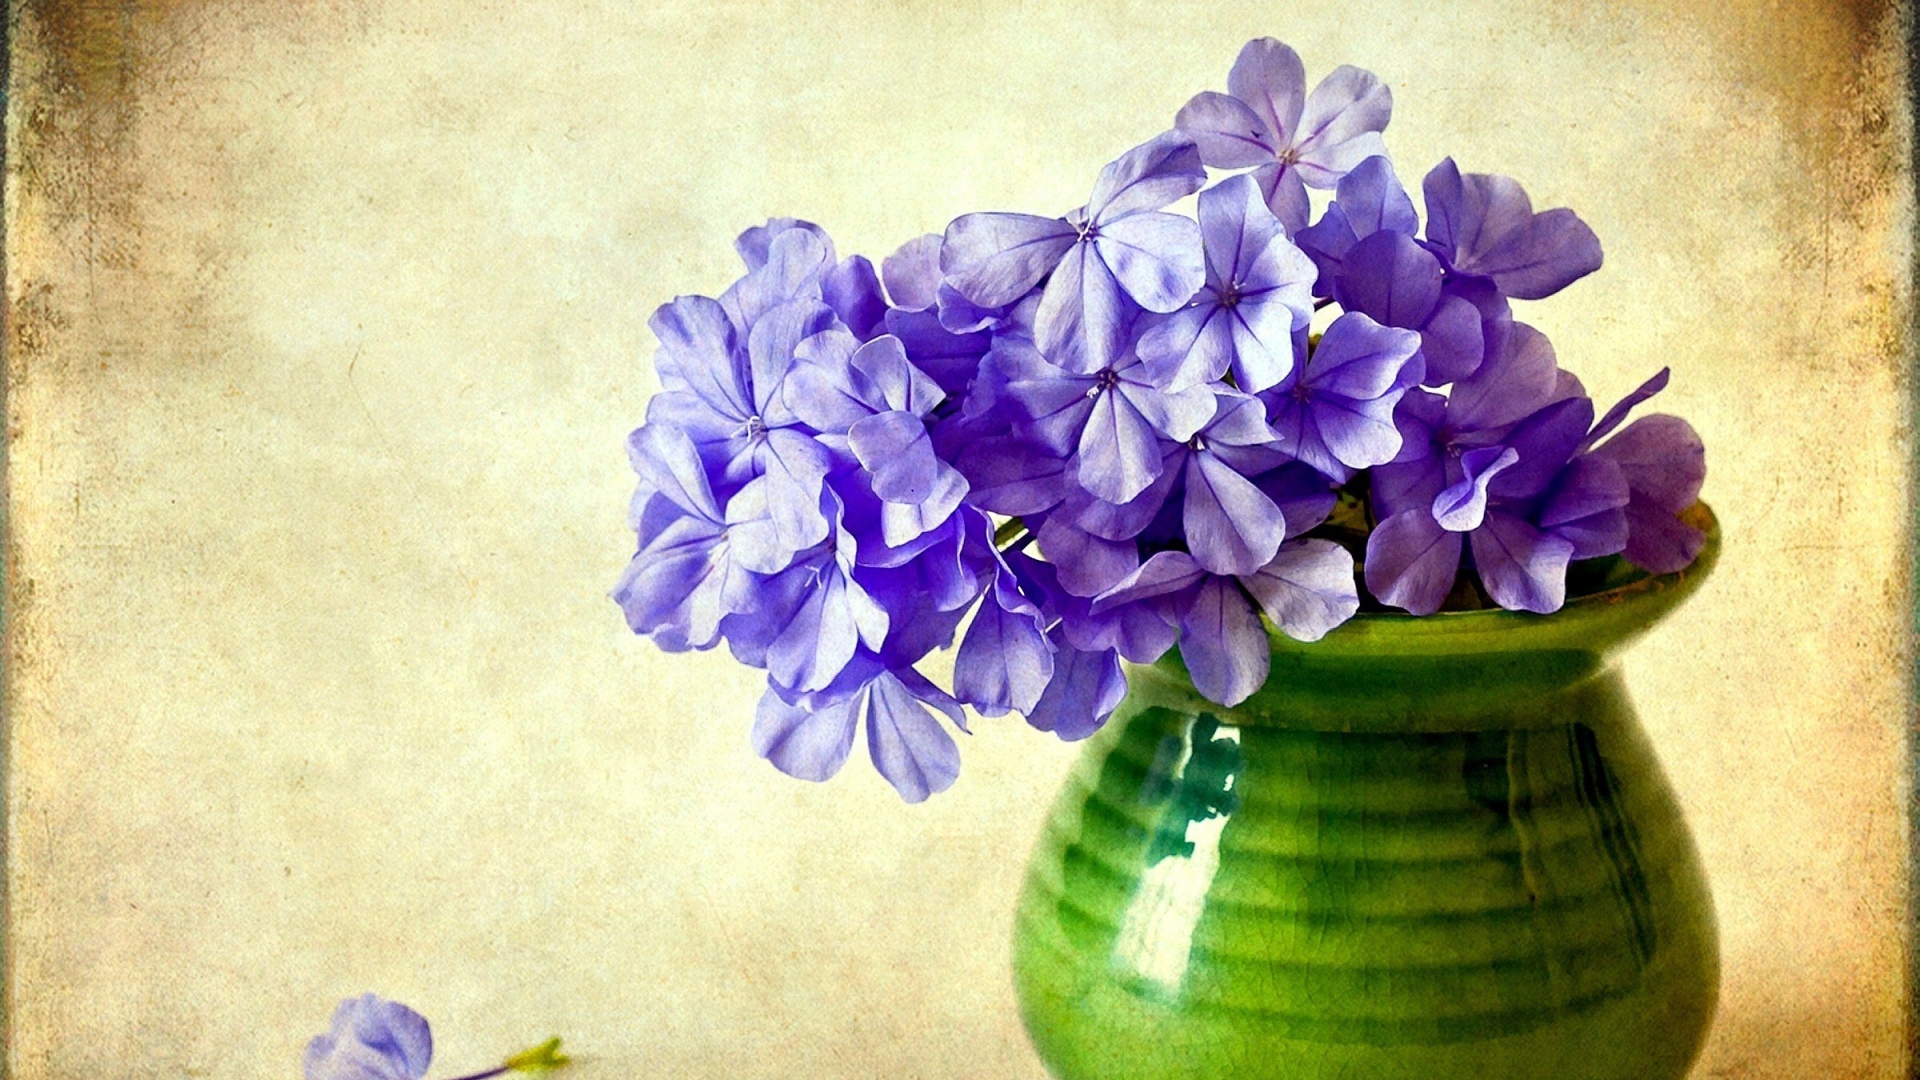 man made, flower, phlox, purple flower, vase, vintage